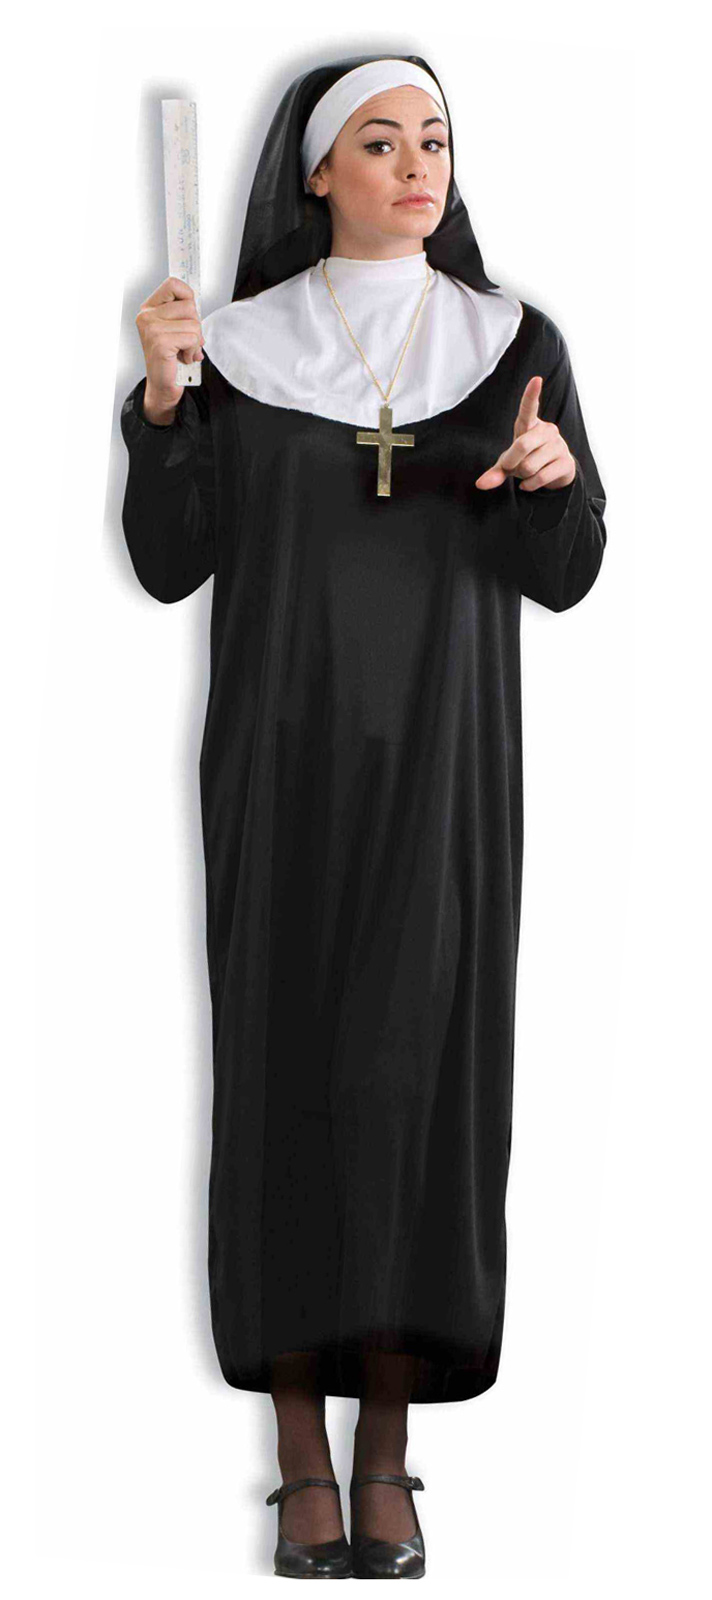 Catholic Nun Mother Superior Habit Religious Sister Women's Costume ...